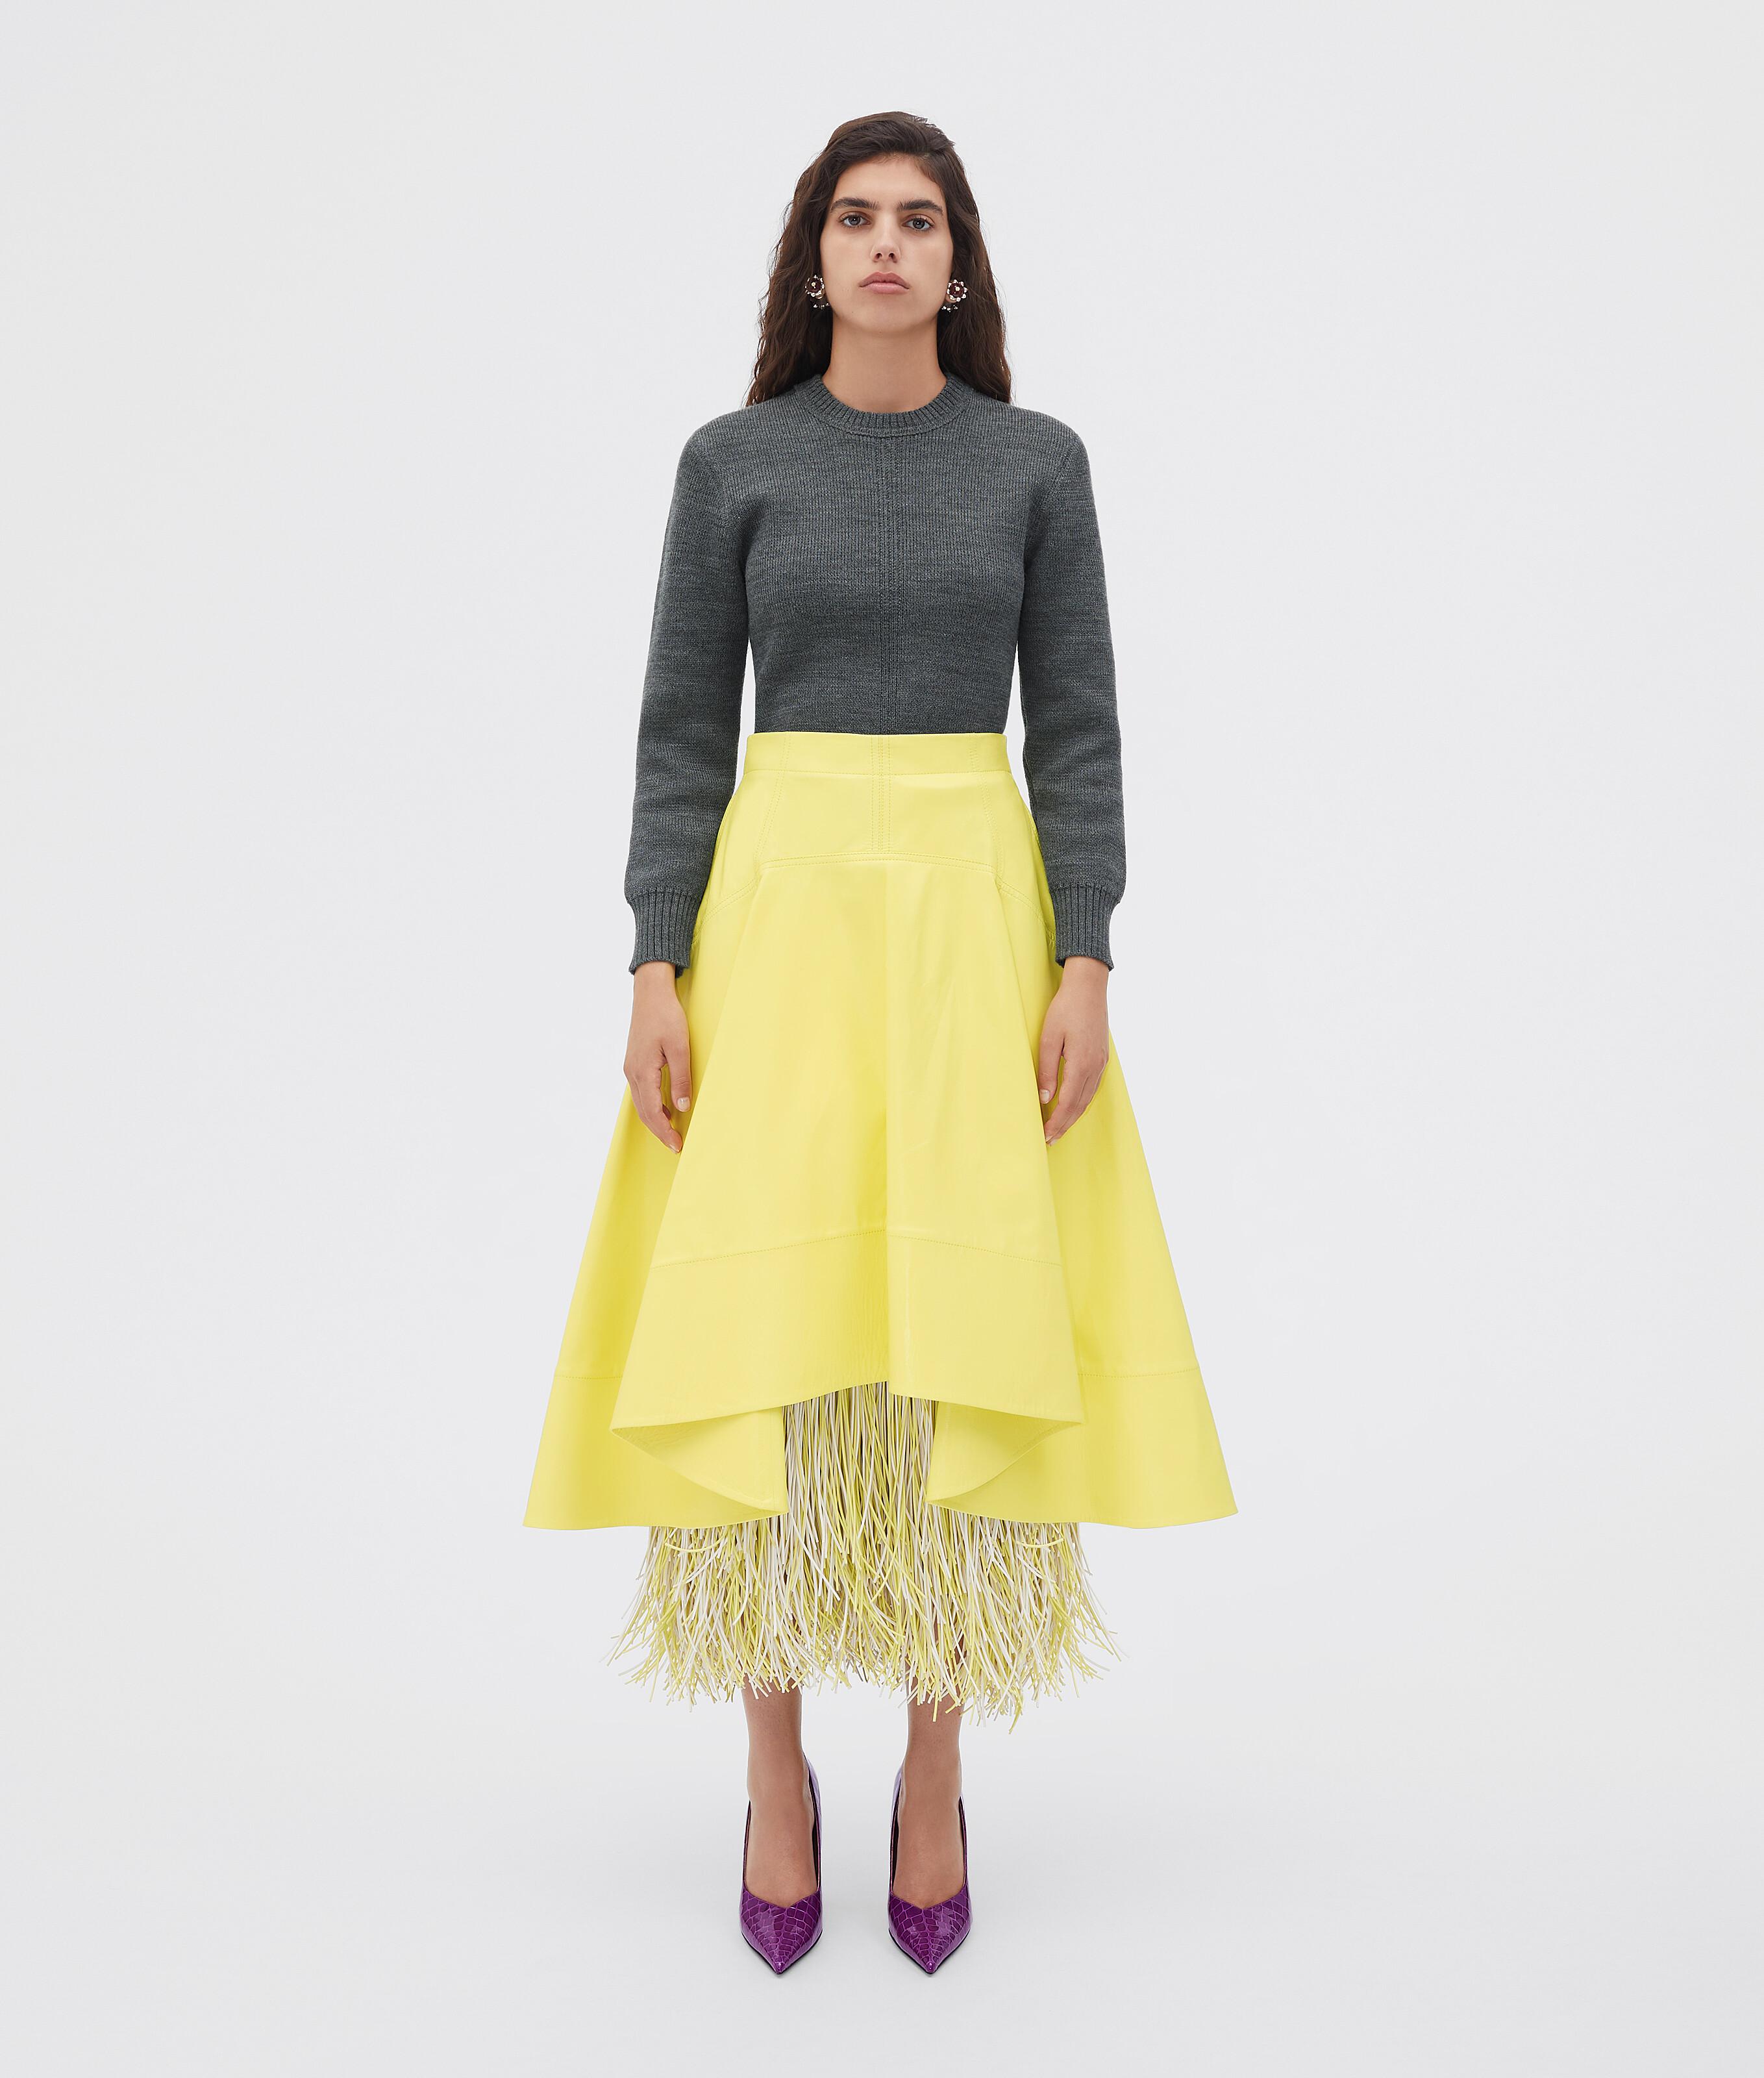 Bottega Veneta Shiny Leather Skirt in Yellow | Lyst